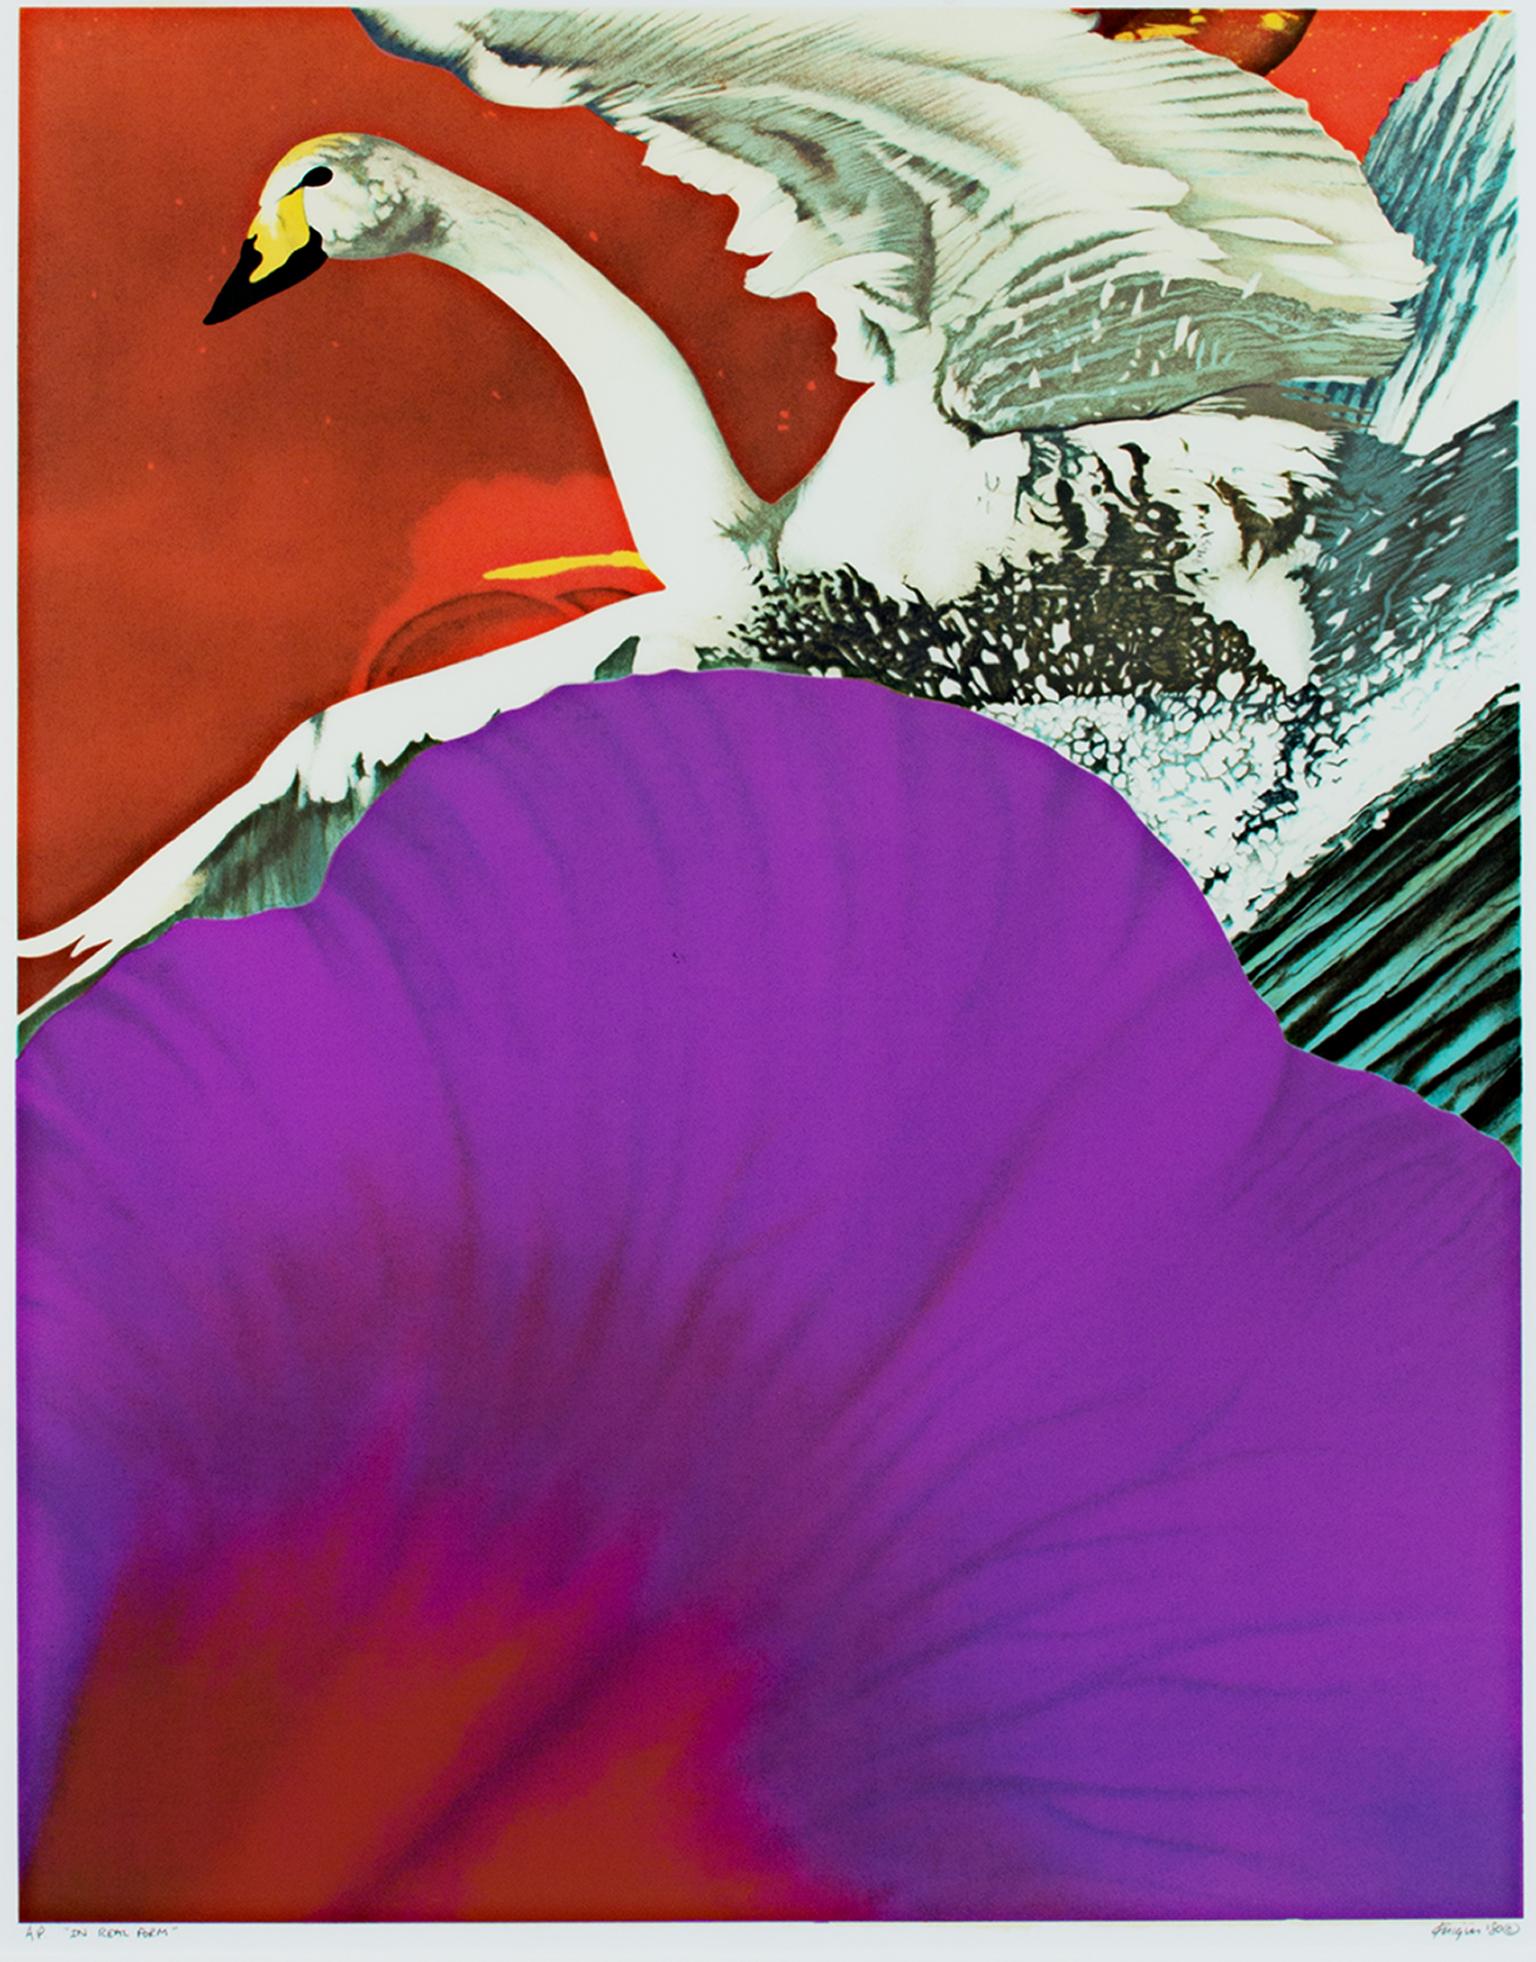 Abstract Print Michael Knigin - "In Real Form" lithographie originale signée pop art réaliste cygne floral vibrant.